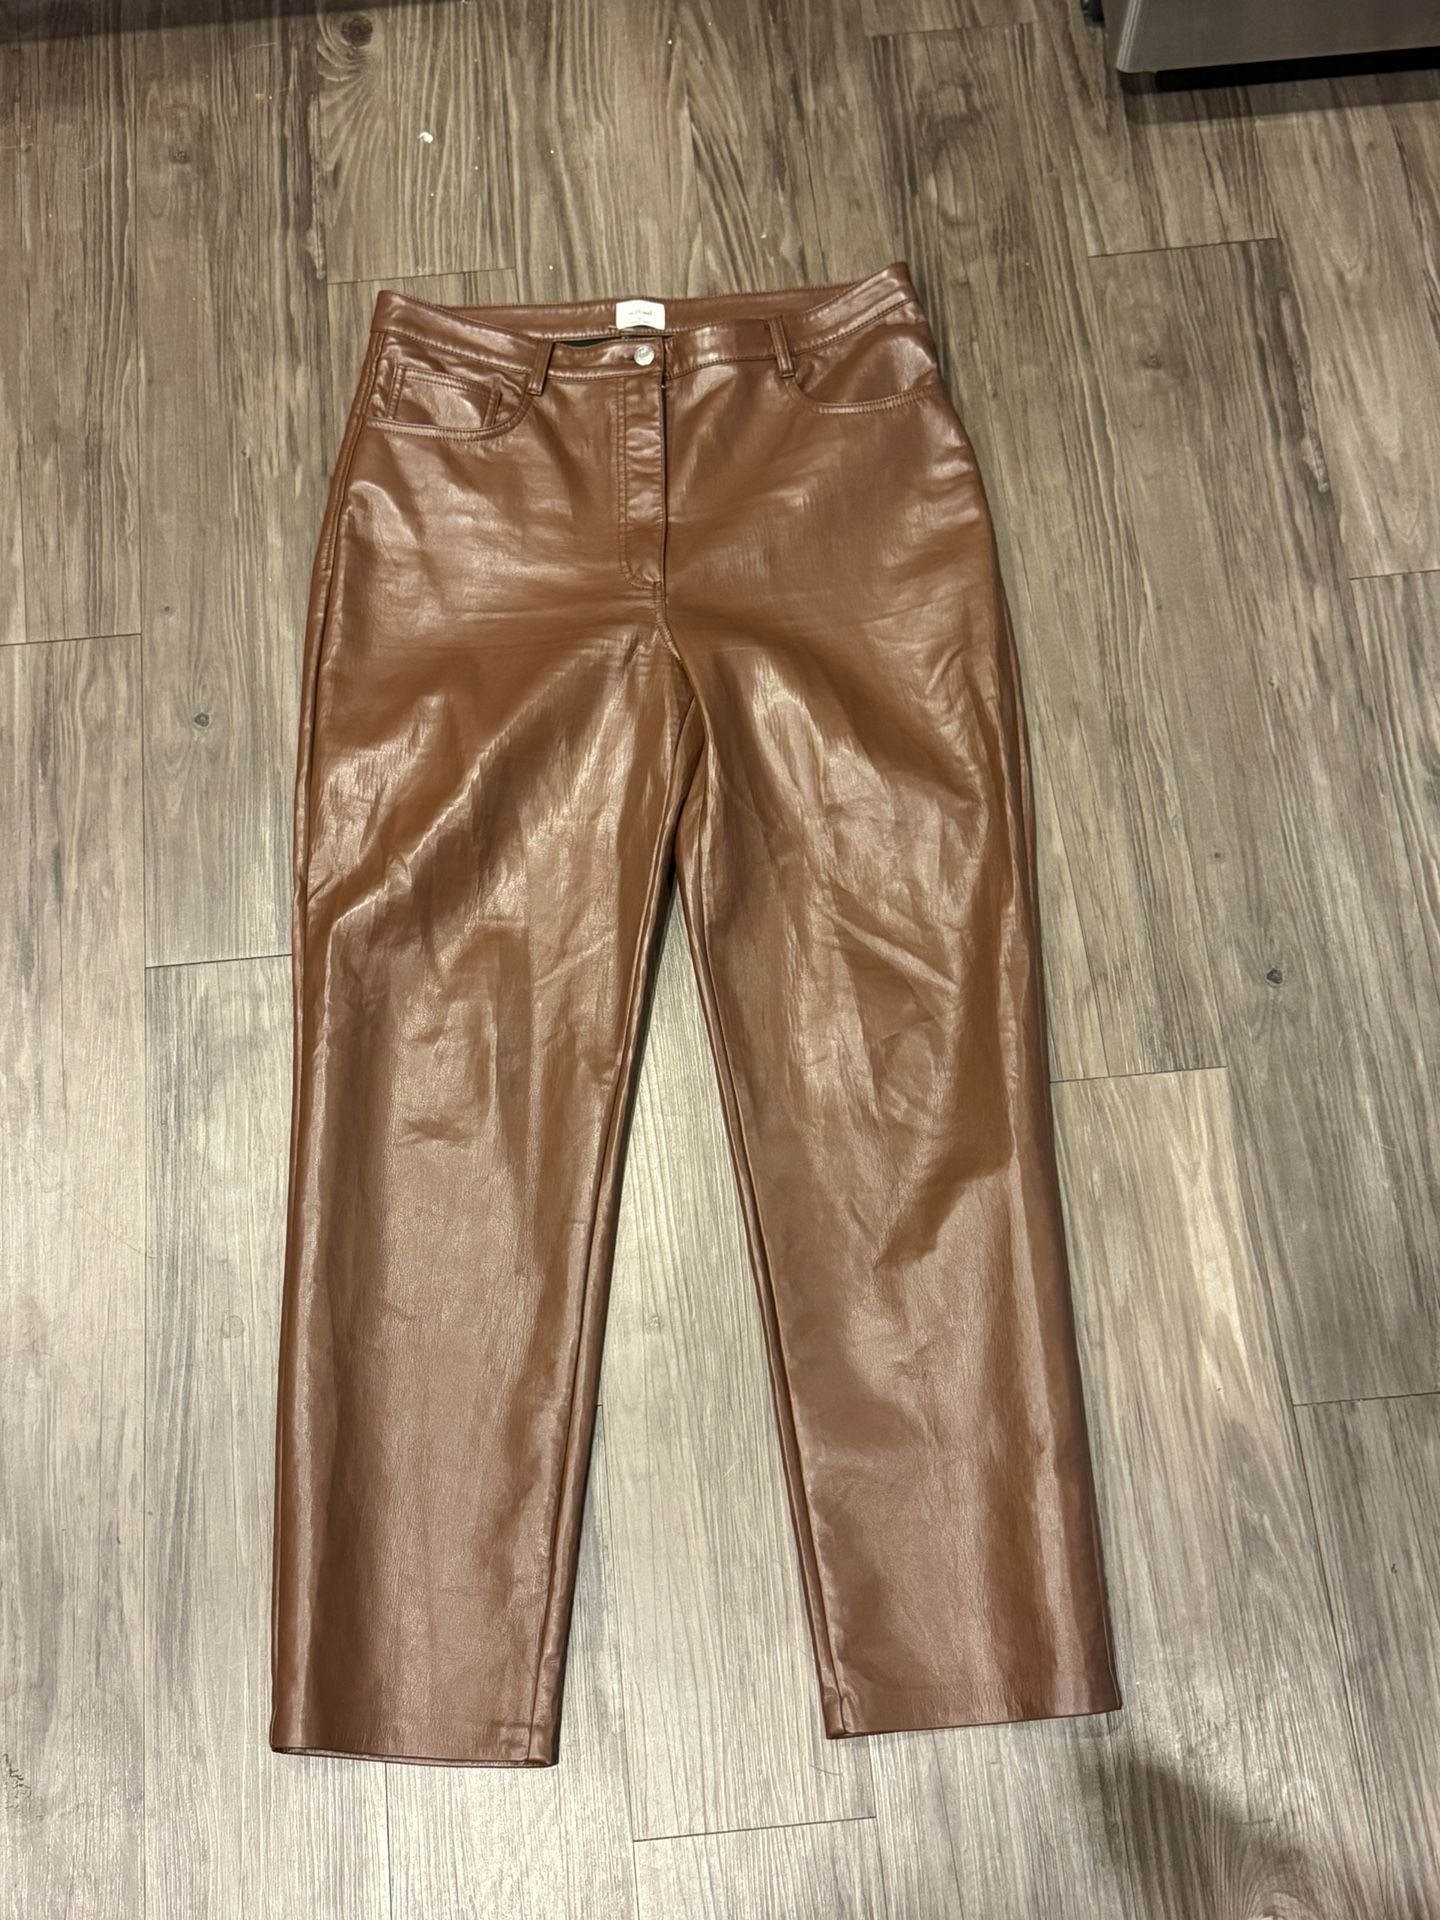 Aritzia Leather Pants 